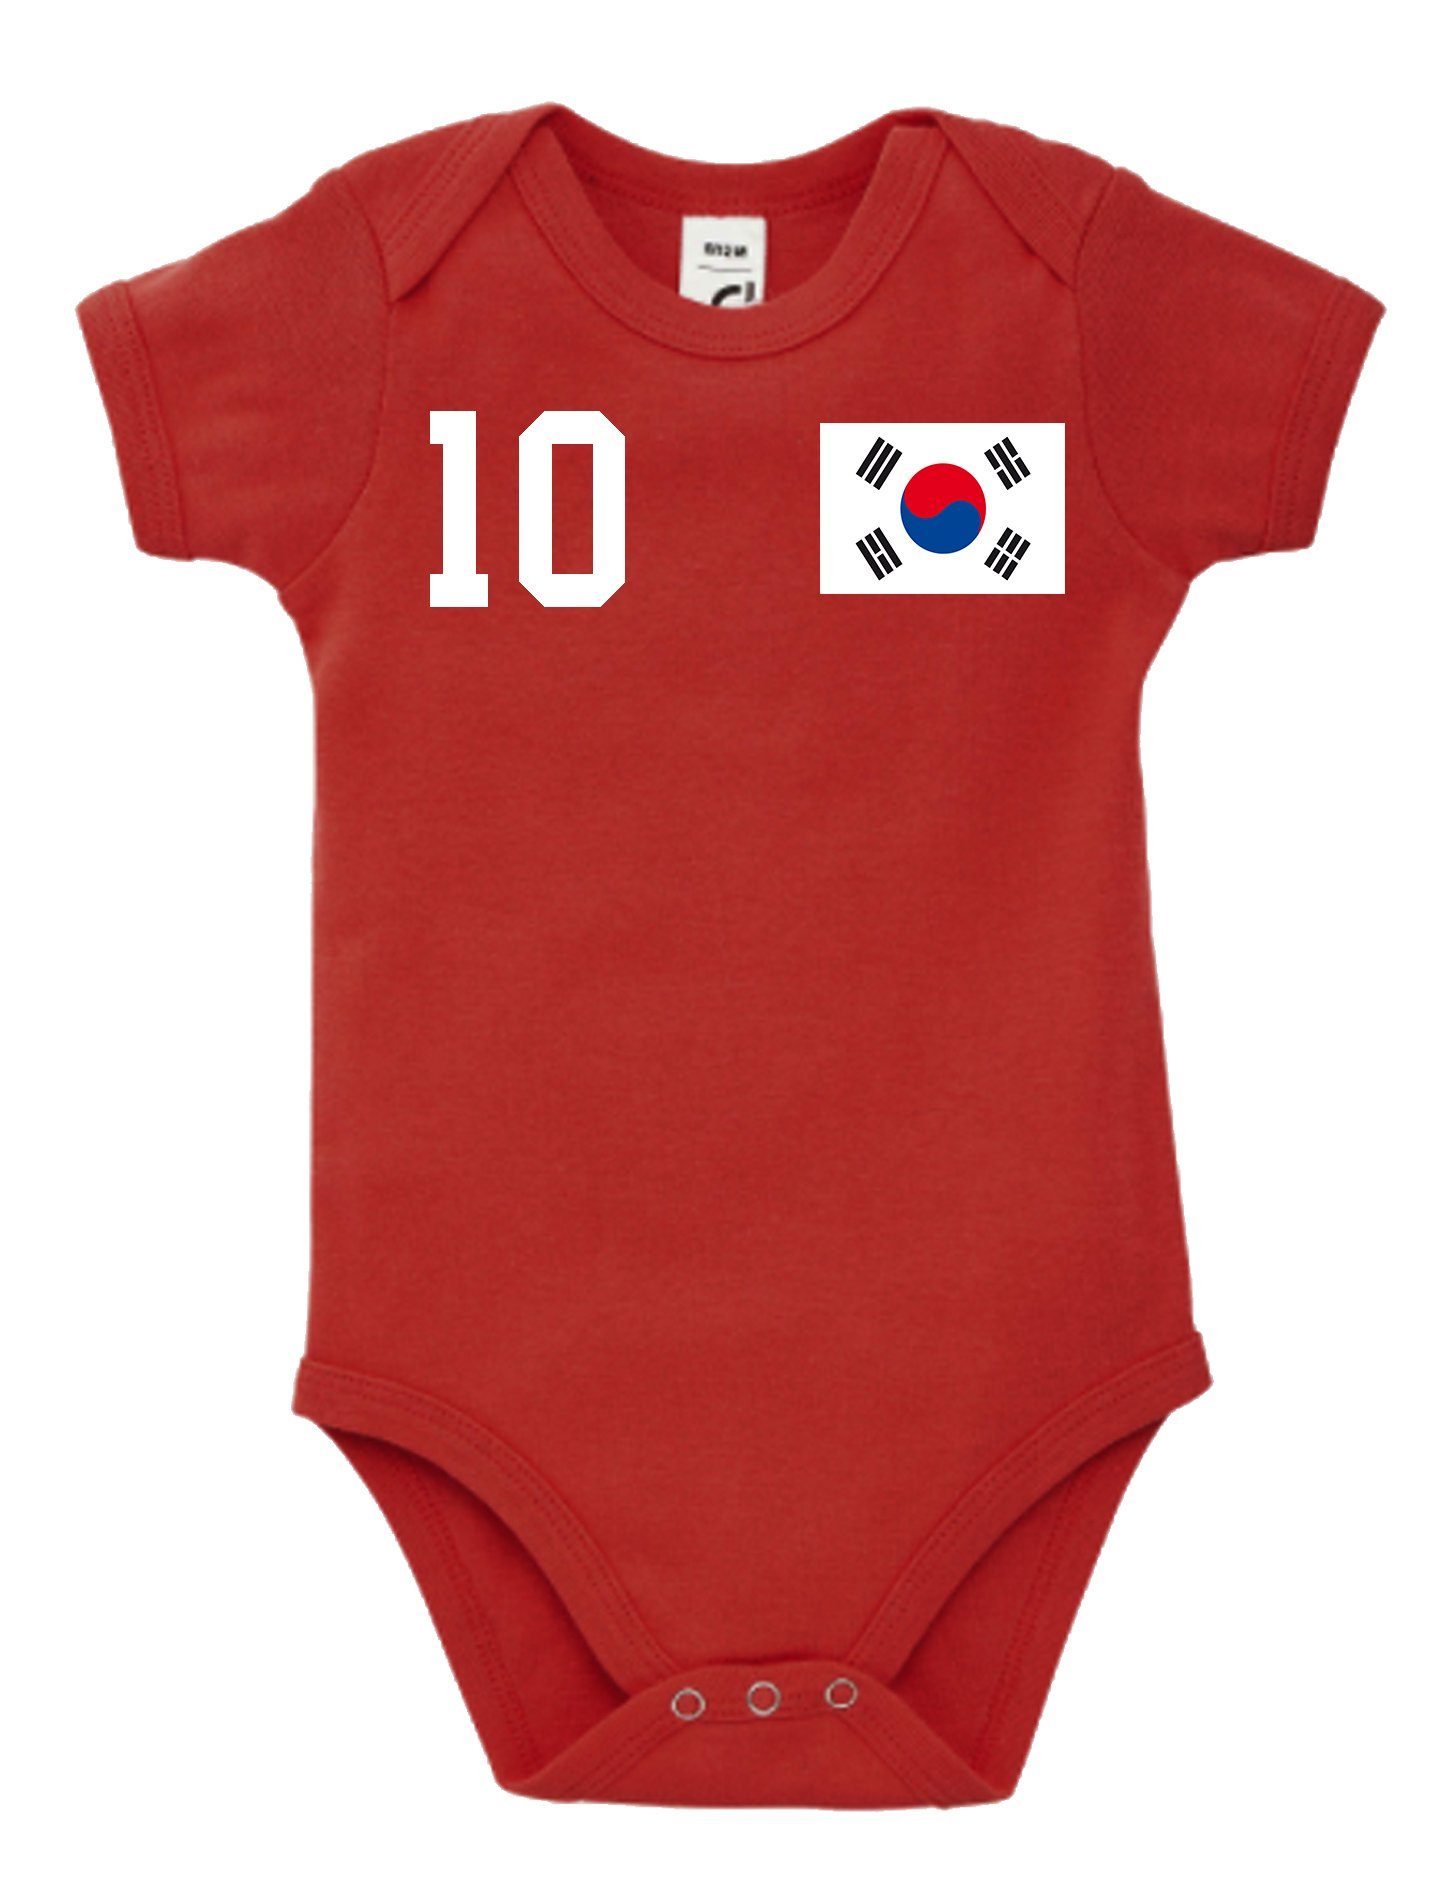 mit Designz Strampler trendigem Südkorea Motiv Kinder Body Baby Youth Kurzarmbody